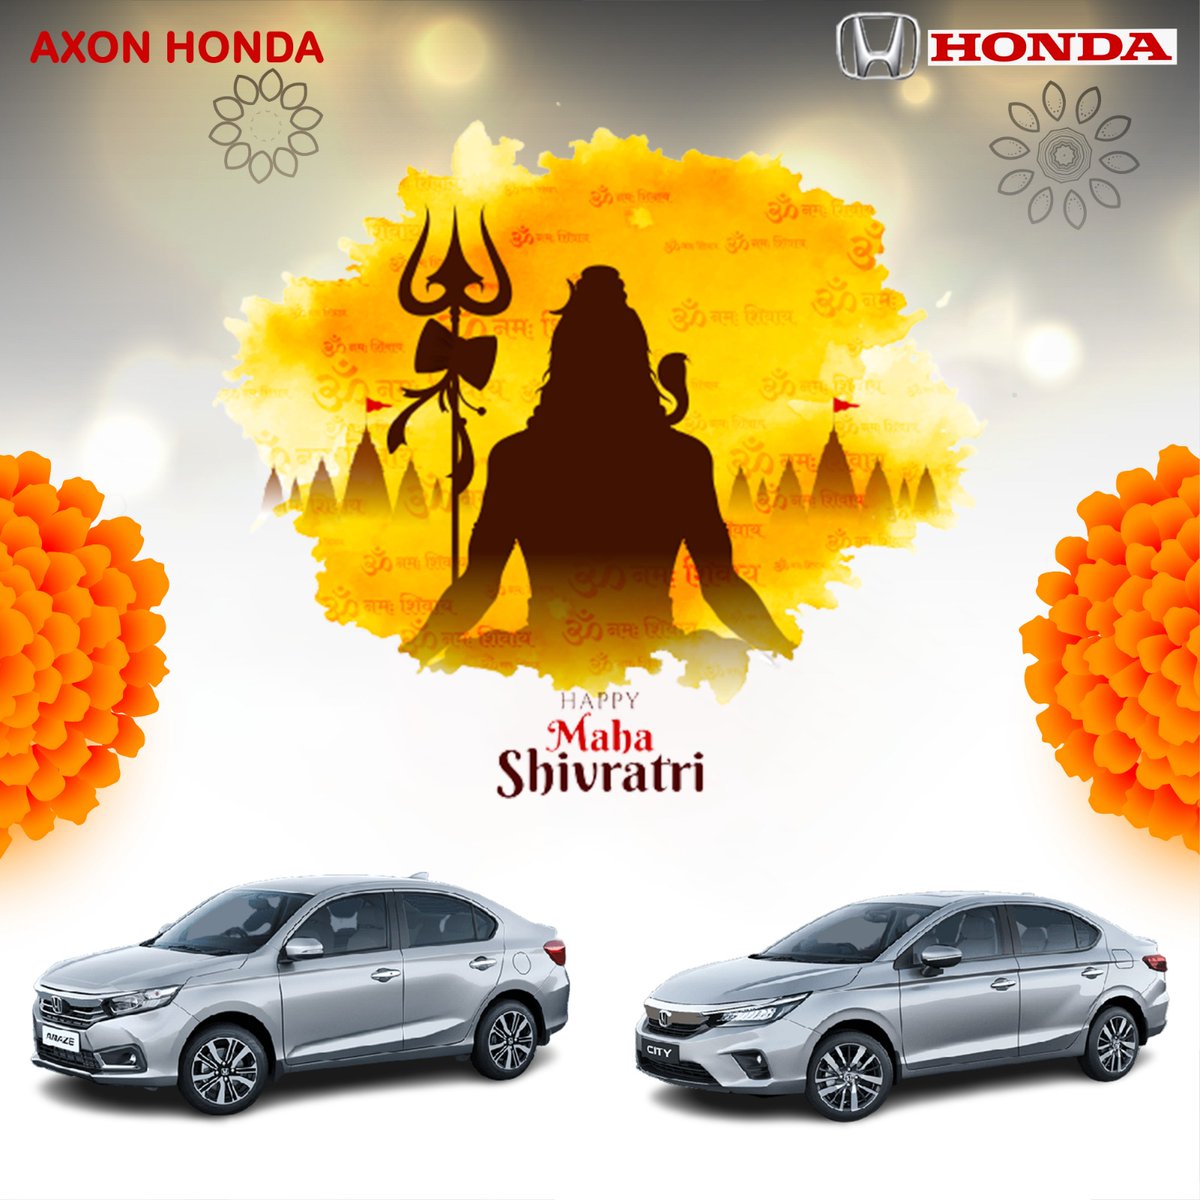 Axon Honda wishes you a blessed Maha Shivratri. #MahaShivaratri #mahashivratri2023 #festival #crownhonda #newcar #honda #hondacars #hondacarsindia #hondaindia #hondacity #hondaamaze #ghaziabaddiaries #instagood #instagram #instalike #instamood #instalove  #newcar #hondaassure